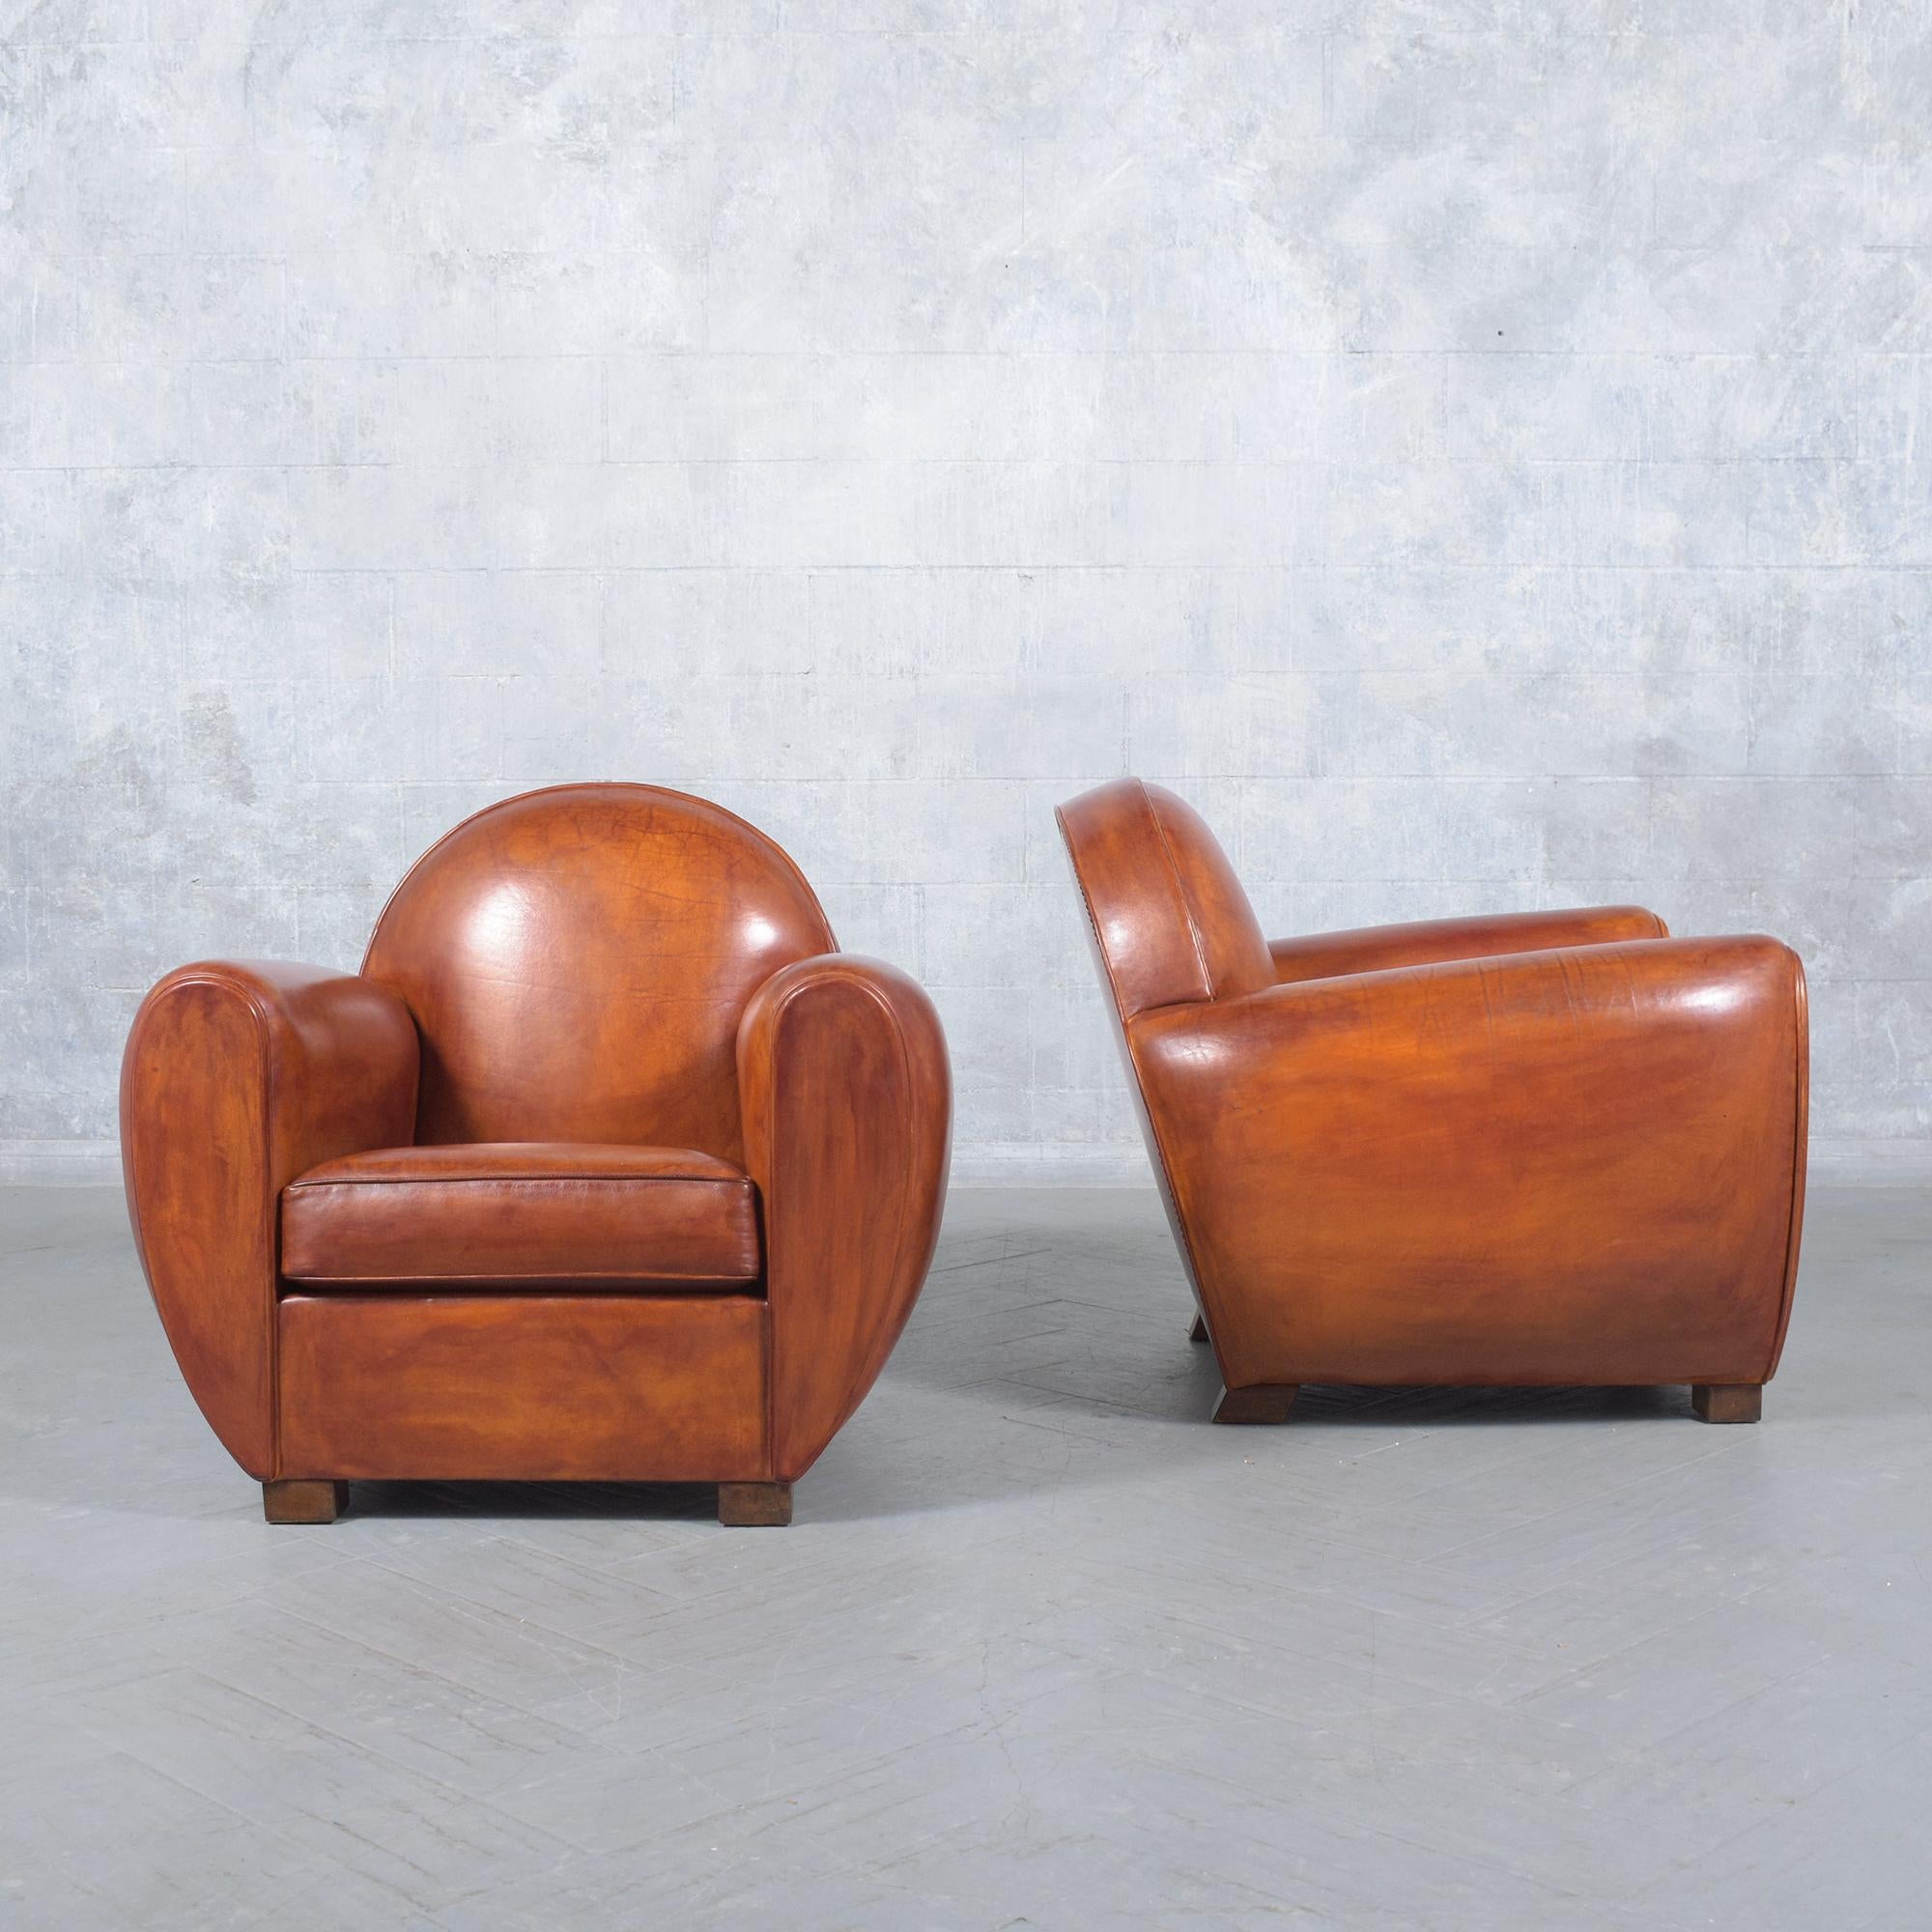 Restored Art Deco Club Chairs: 1960s French Deco Elegance 7